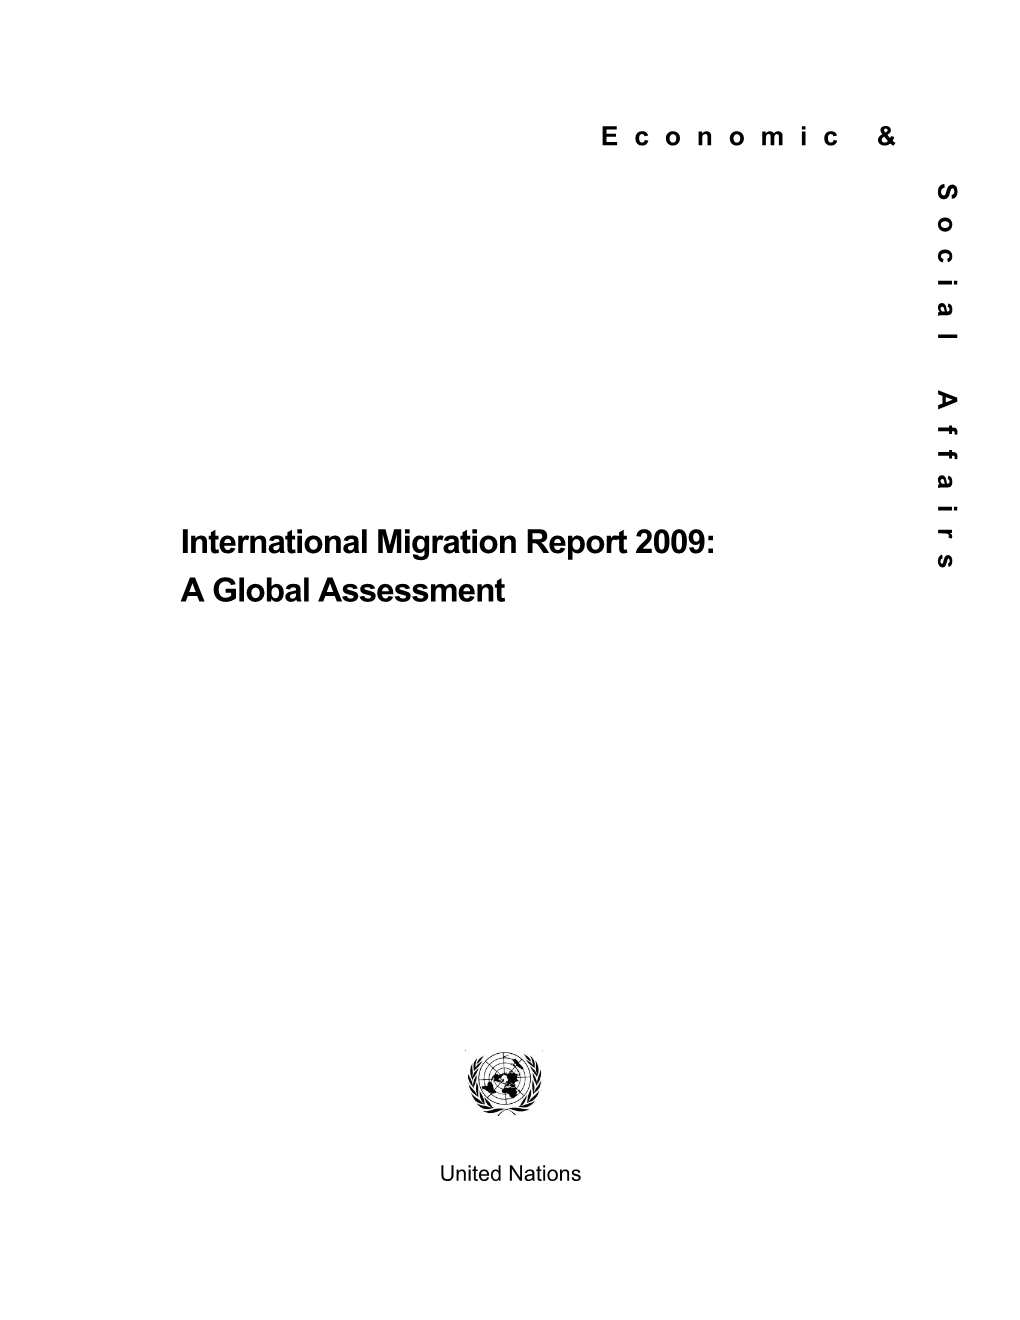 International Migration Report 2009: a Global Assessment